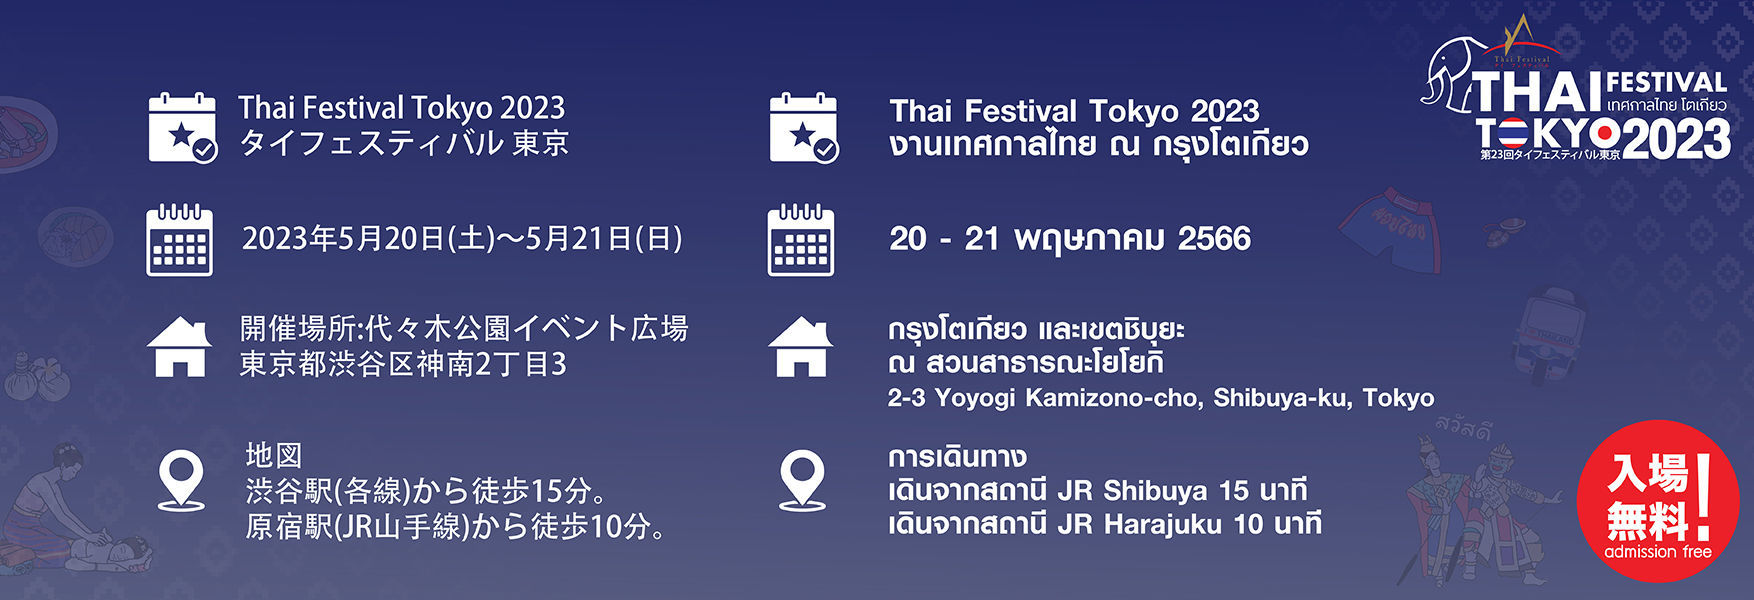 Th Festival Tokyo 2023 Time